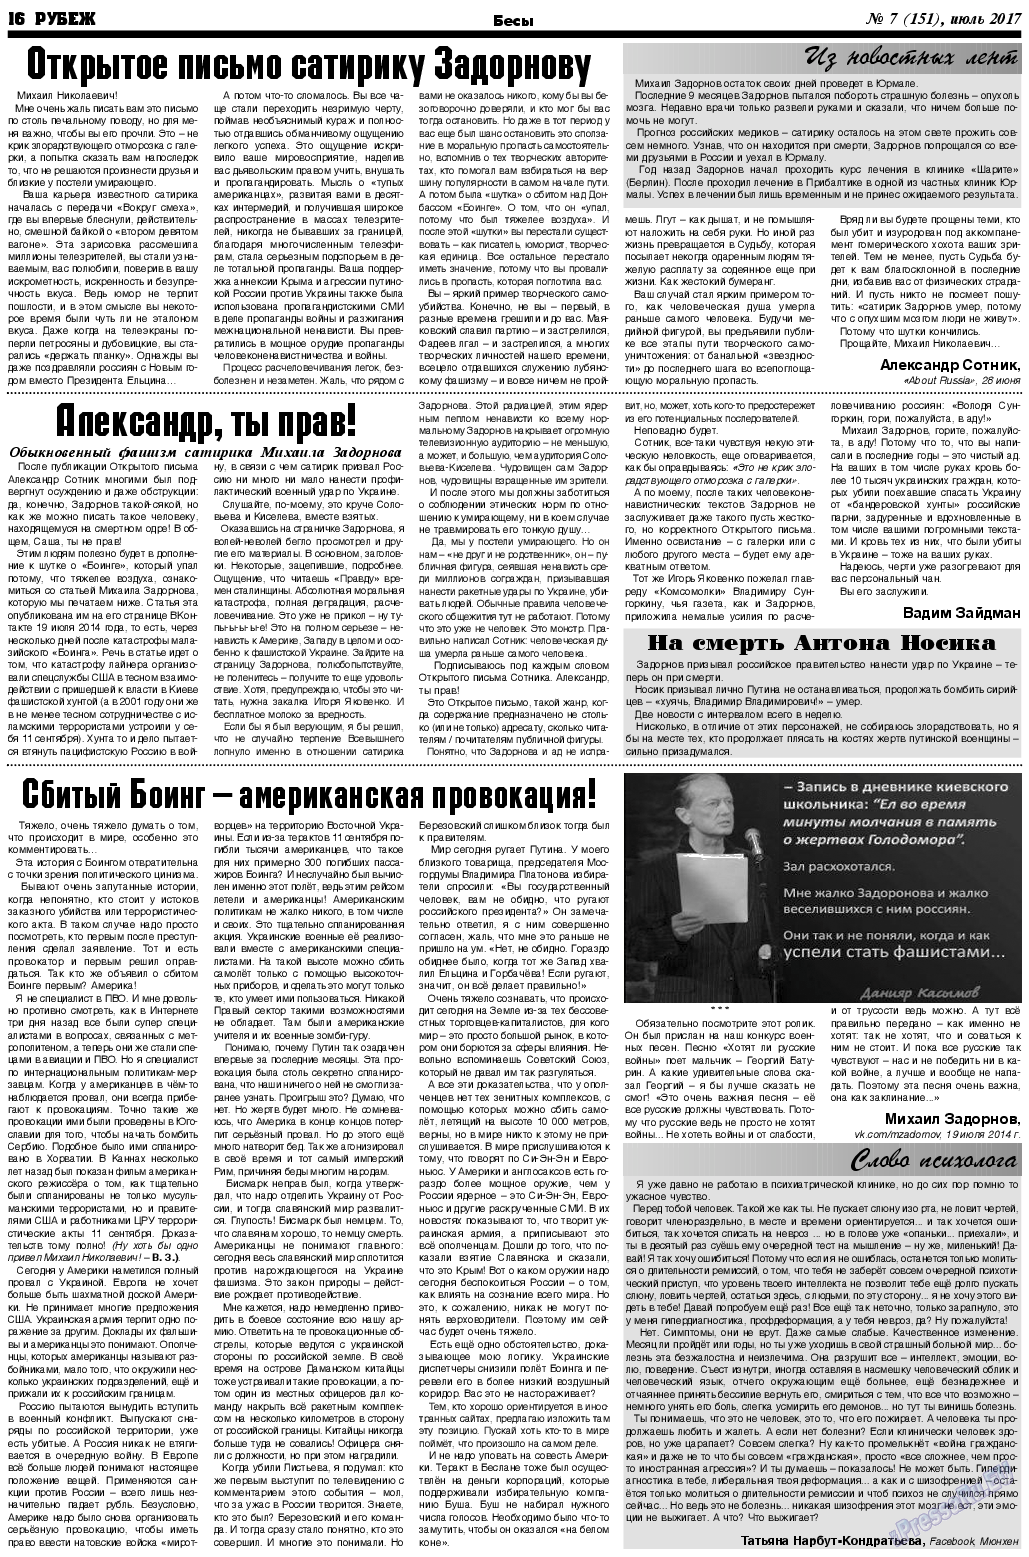 Рубеж, газета. 2017 №7 стр.16